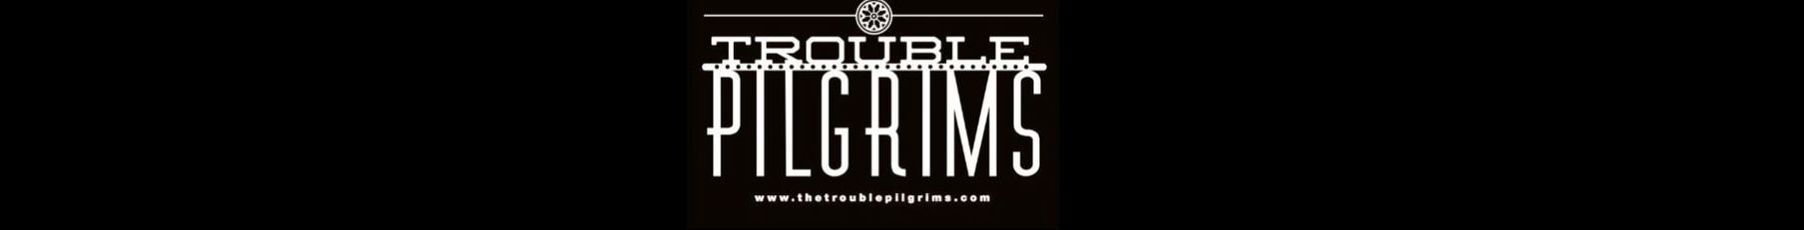 Trouble Pilgrims _Banner